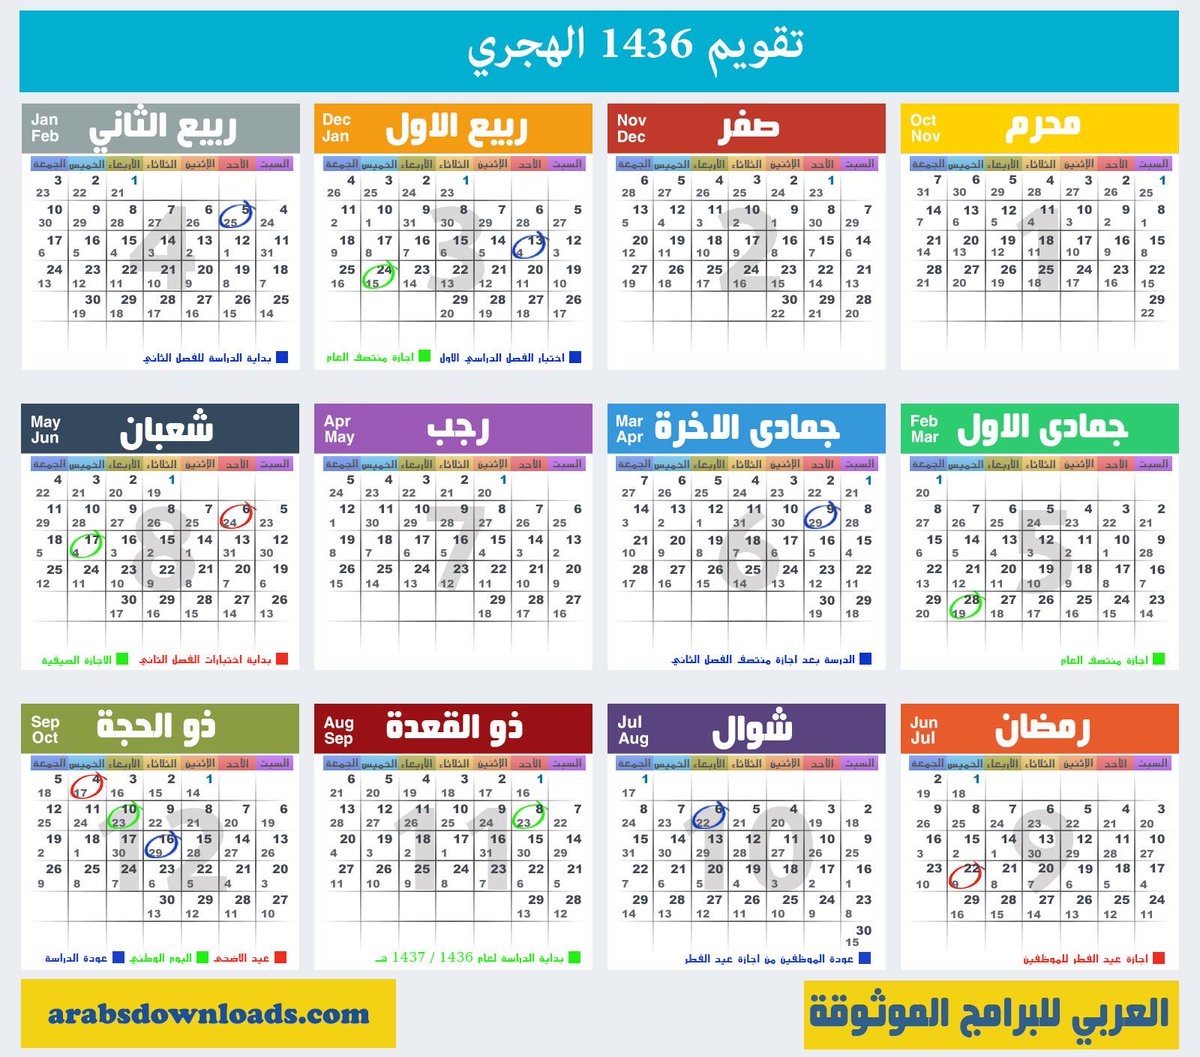 Ramadan 2018 Uk Dates - Shoraer